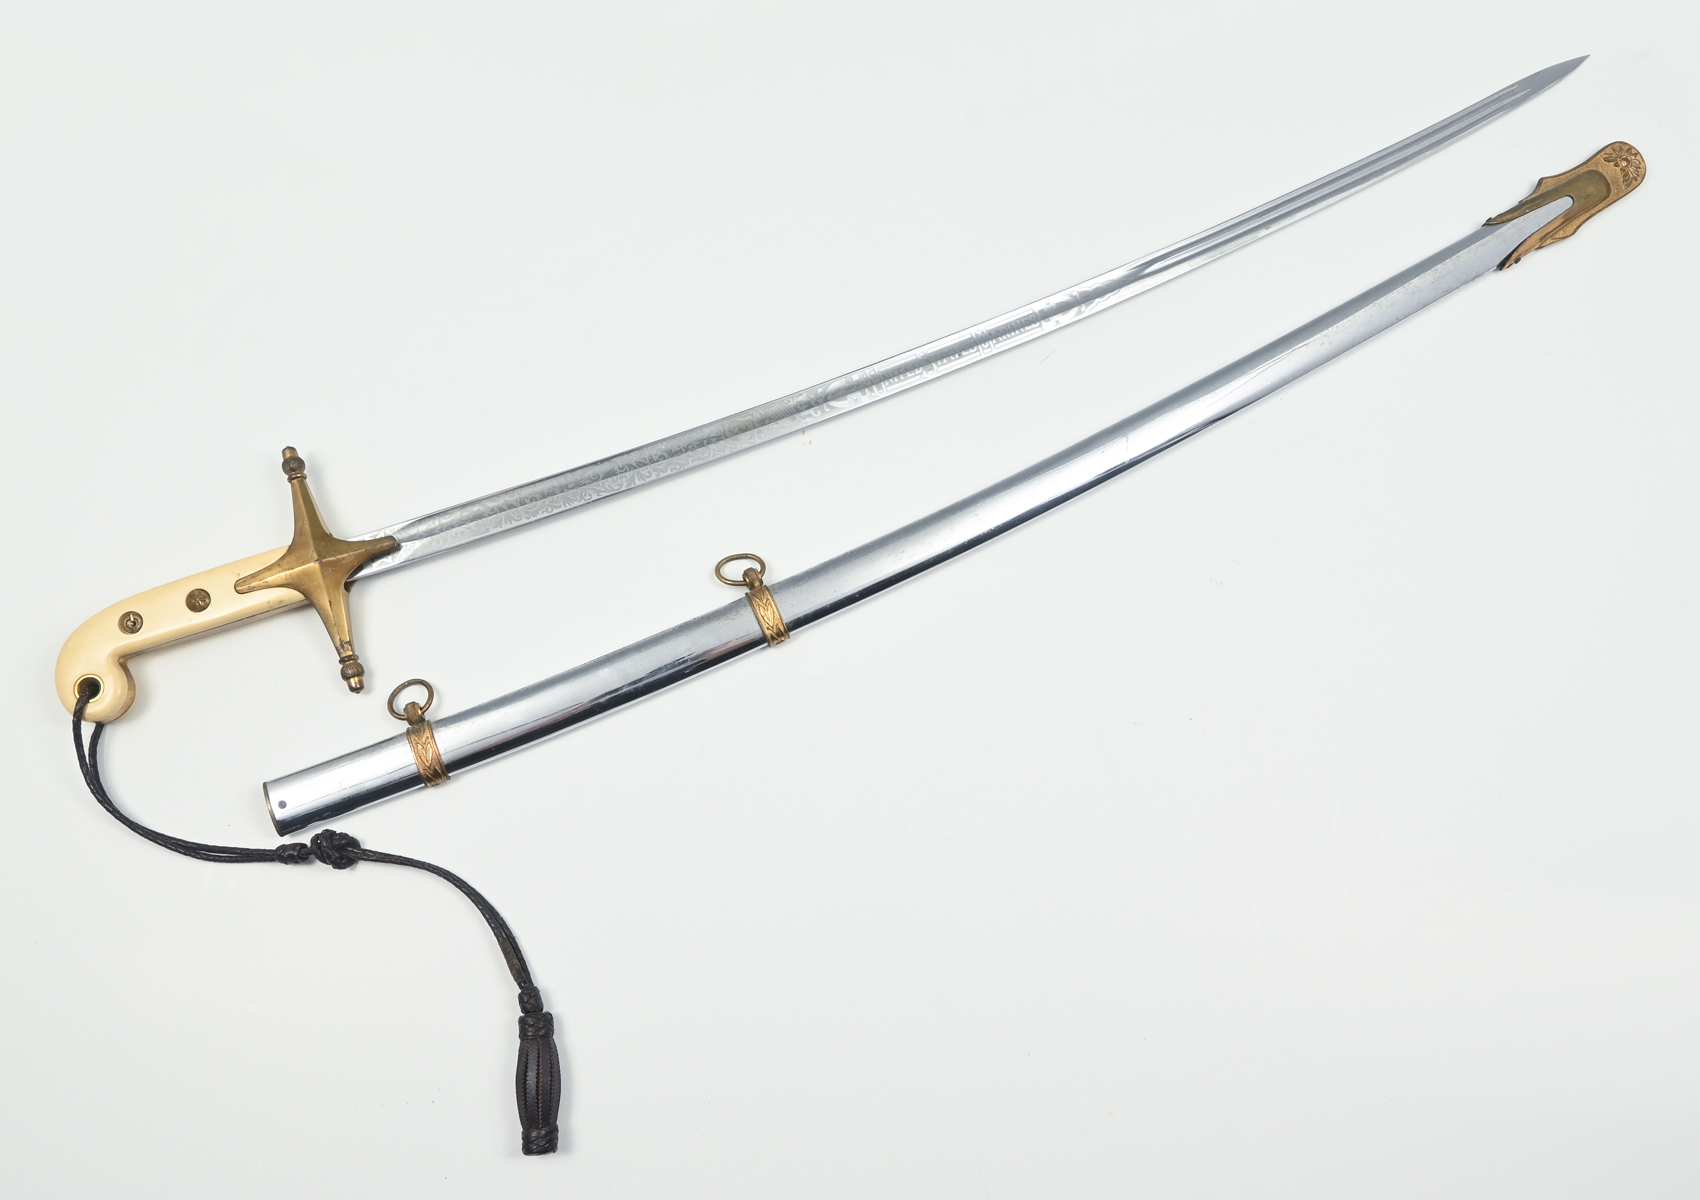 USMC MAMALUKE SWORD: With original